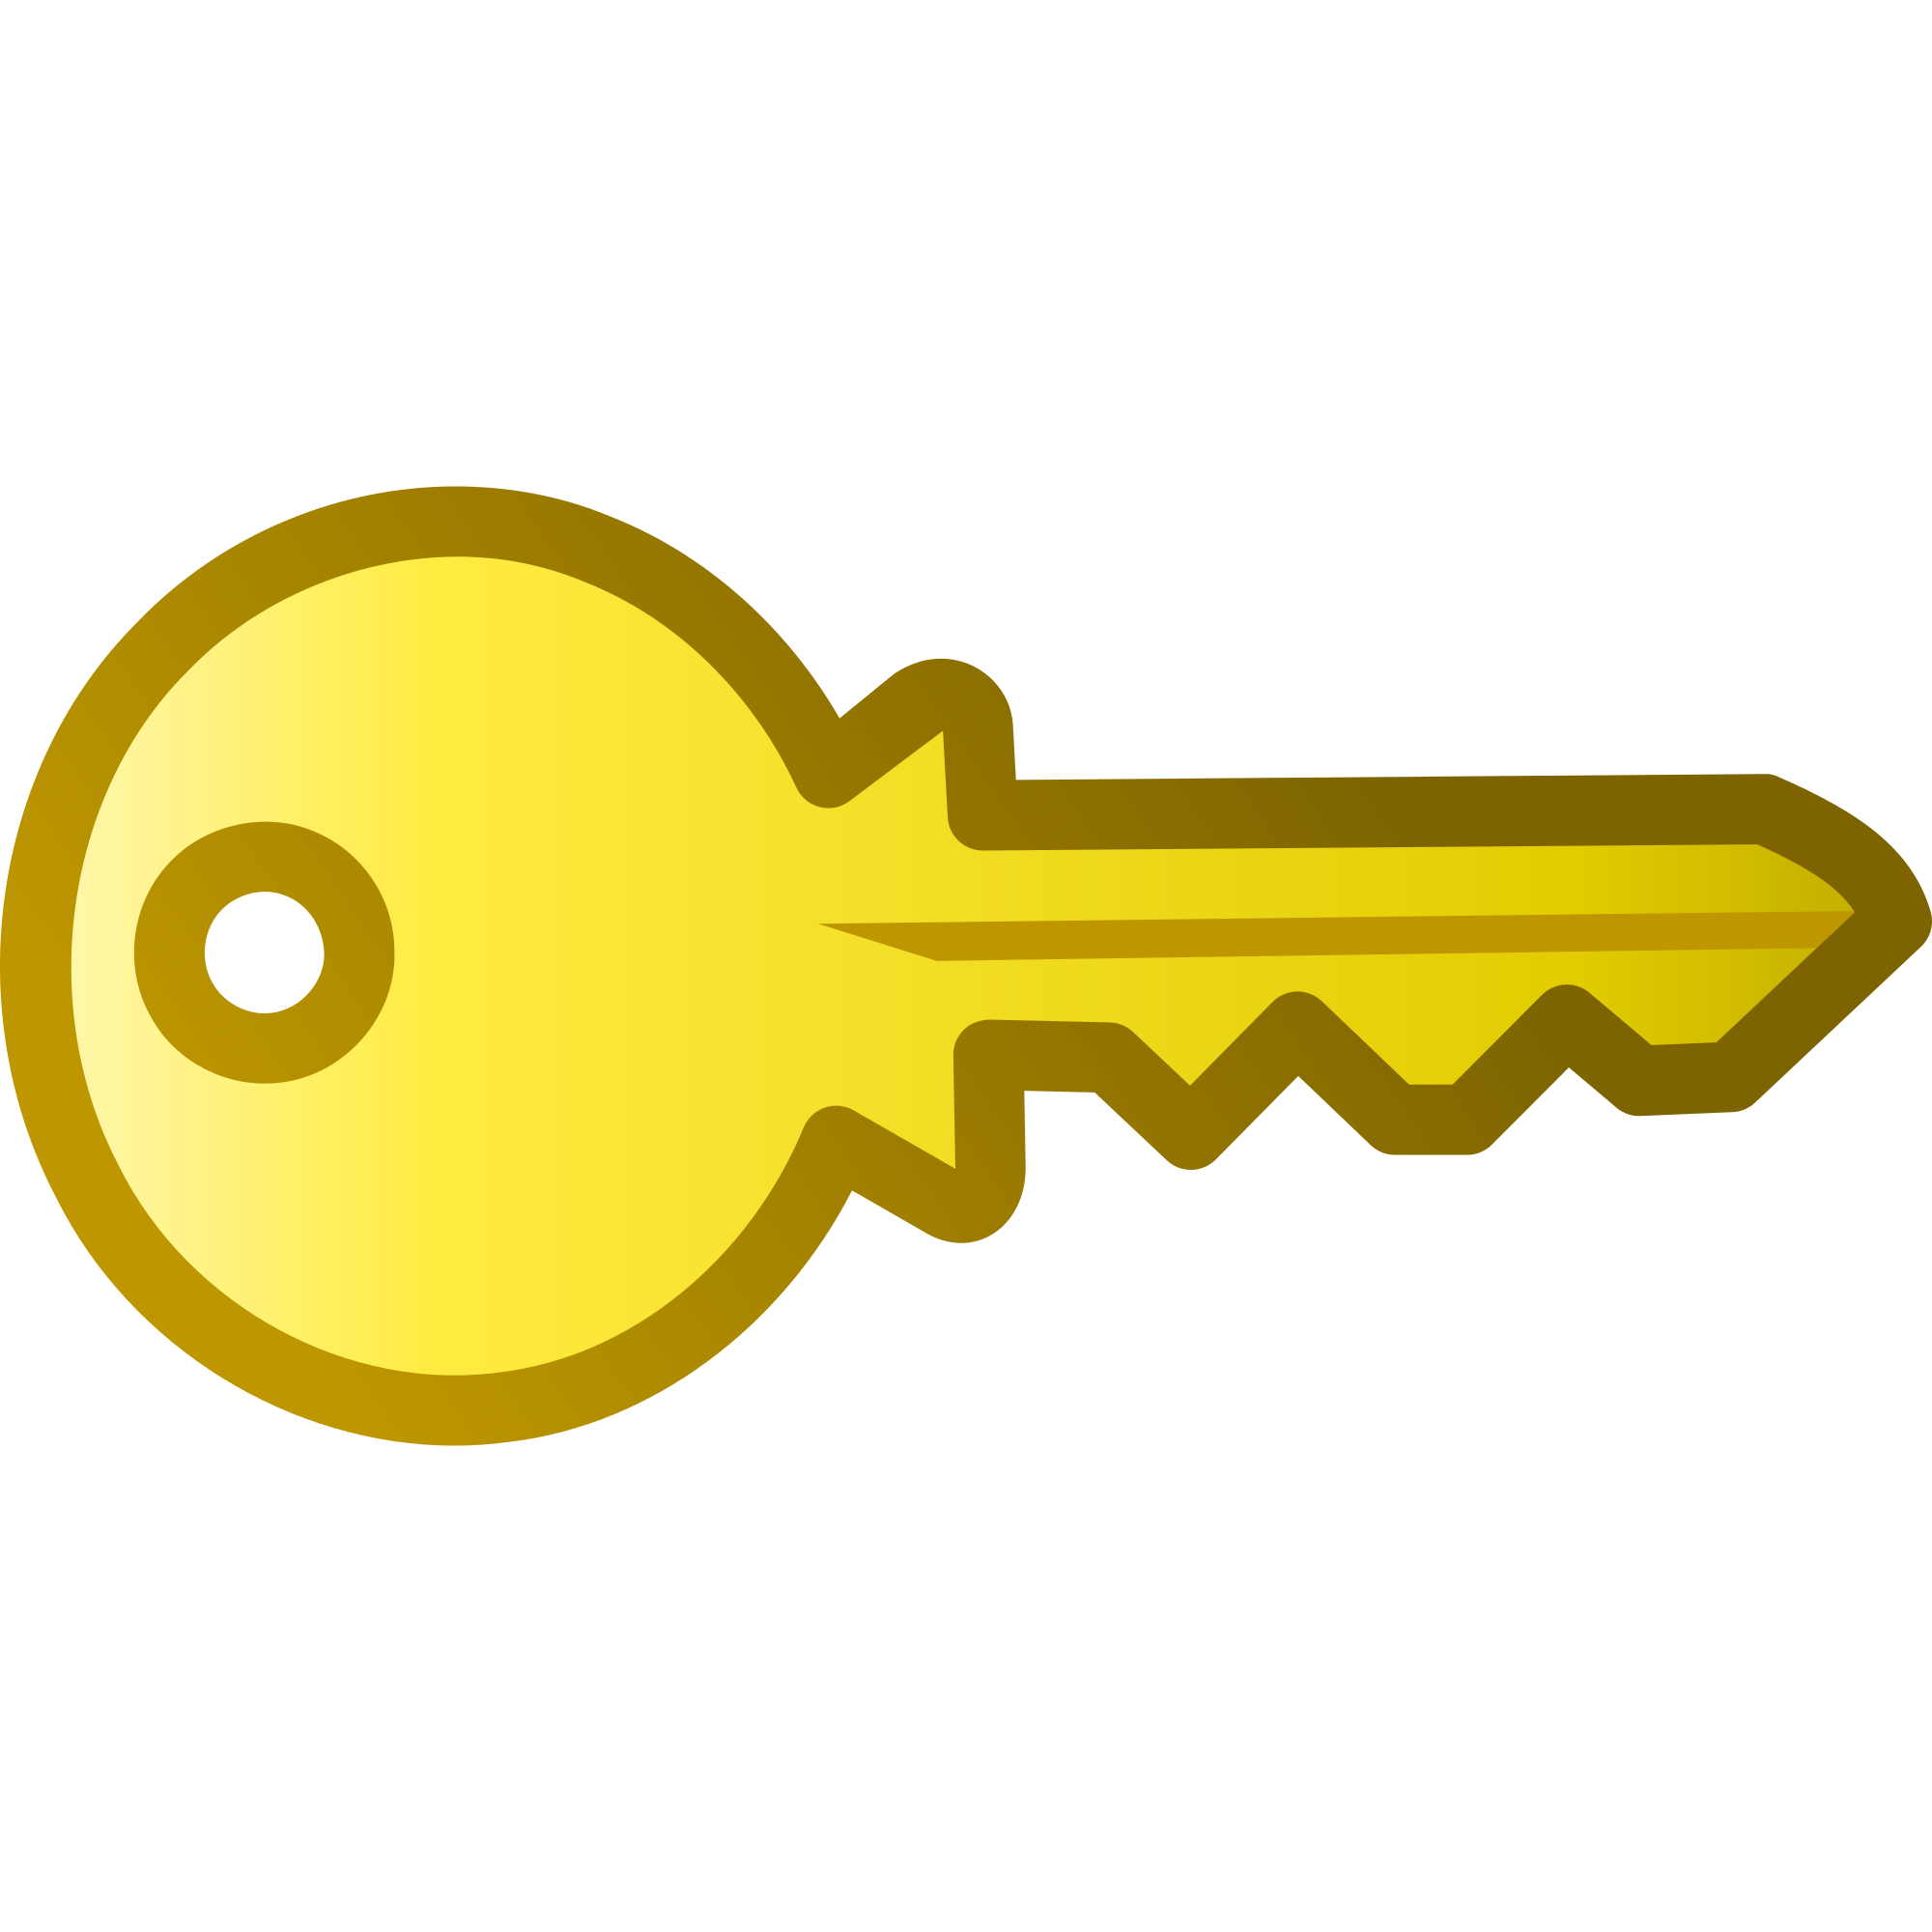 File:Golden key icon - Wikimedia Commons